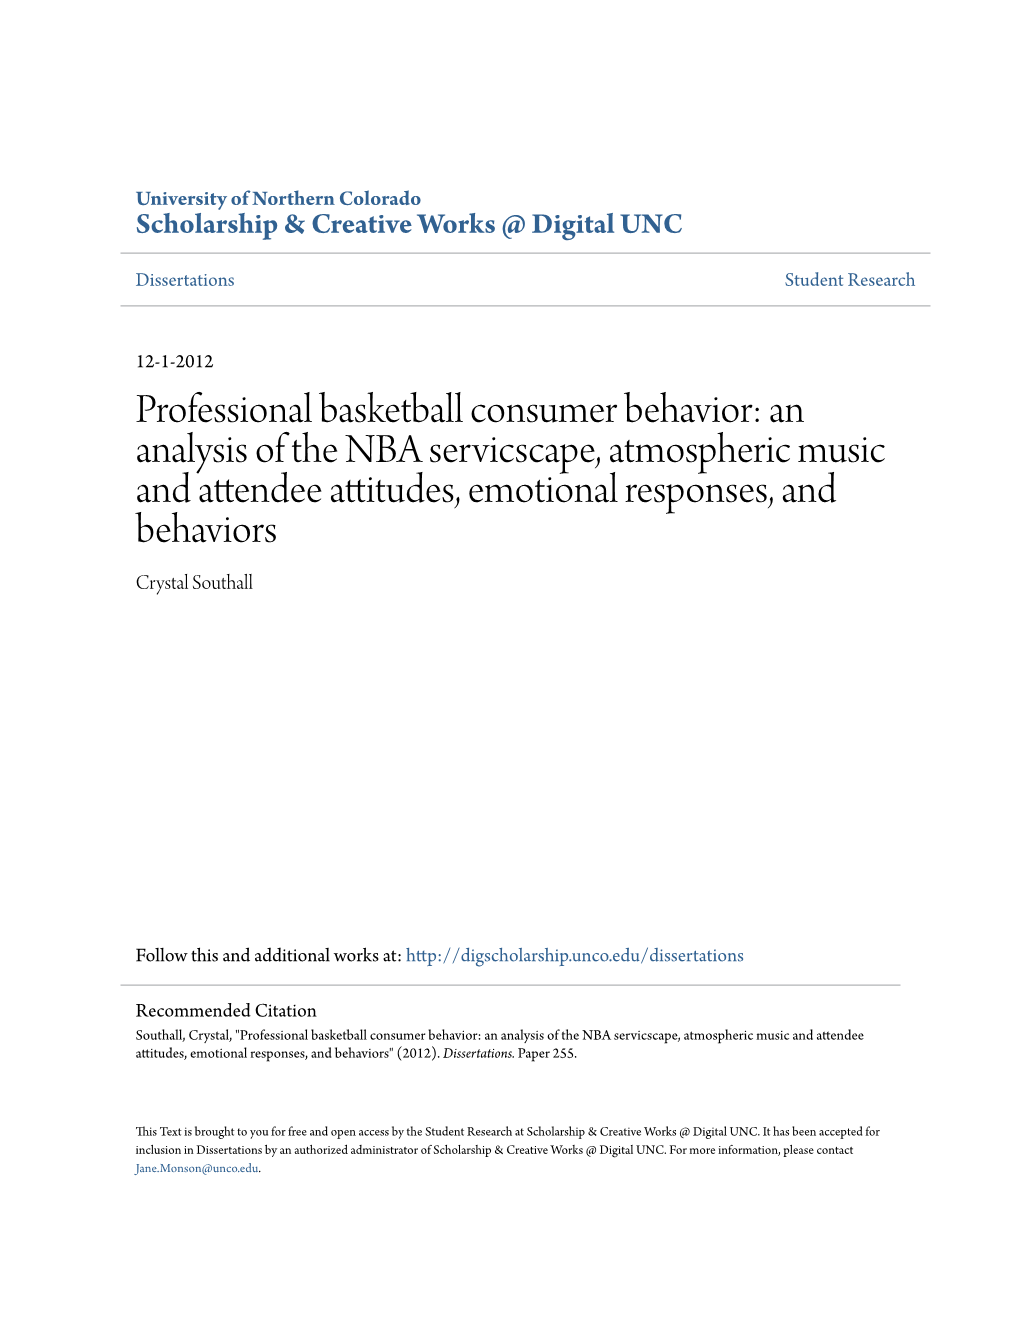 Professional Basketball Consumer Behavior: an Analysis of the NBA